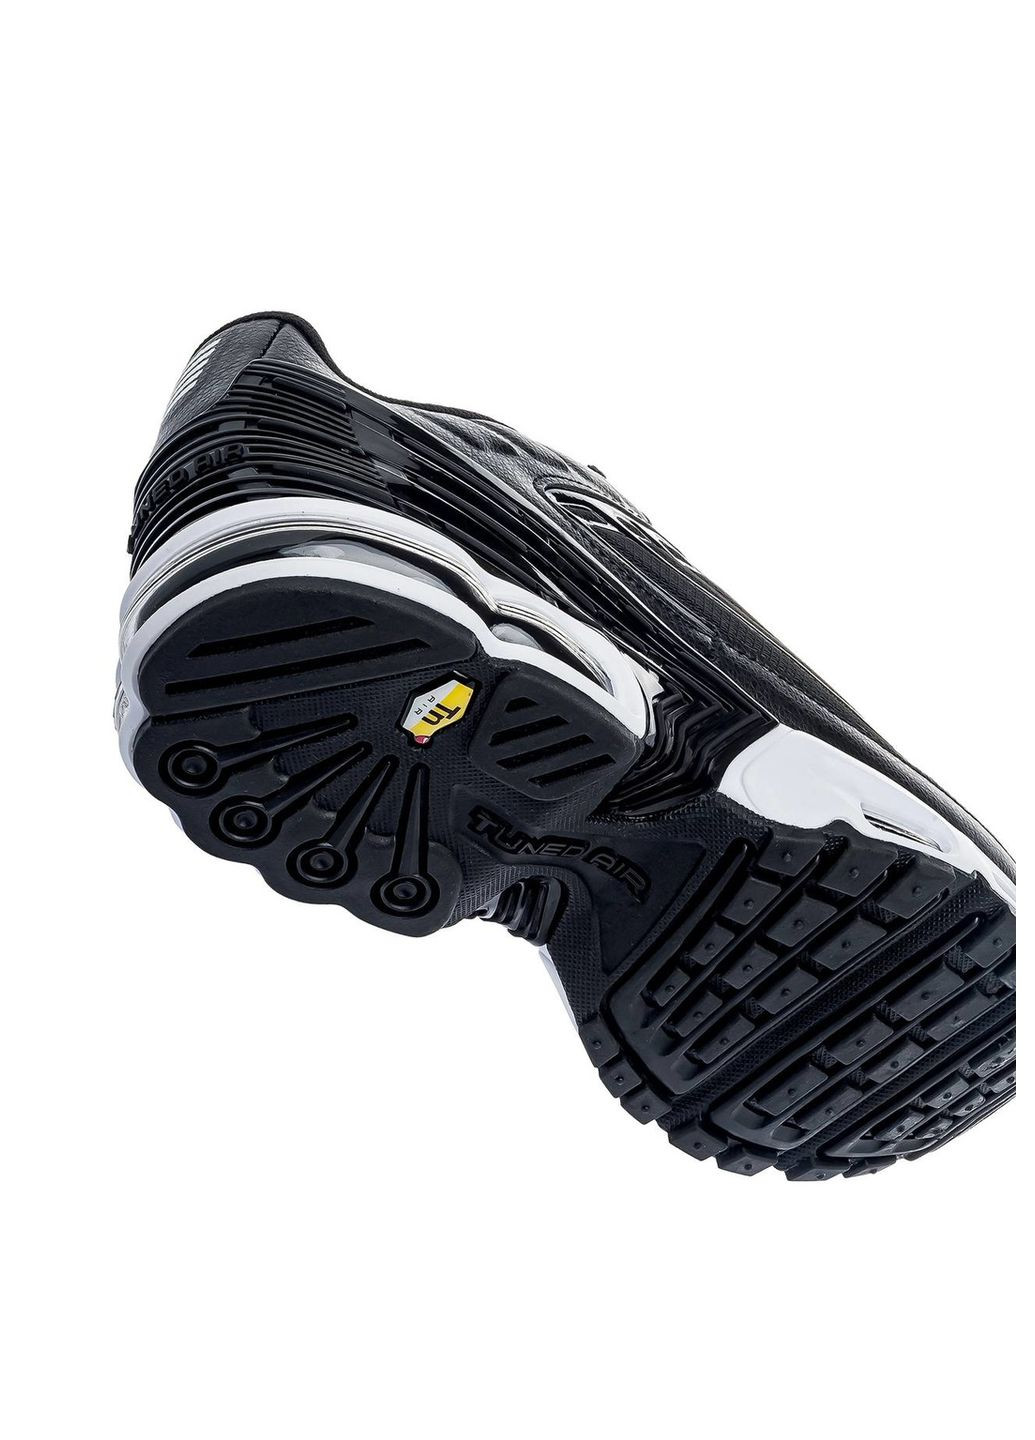 Черные демисезонные кроссовки мужские 3 leather black white, вьетнам Nike Air Max TN Plus